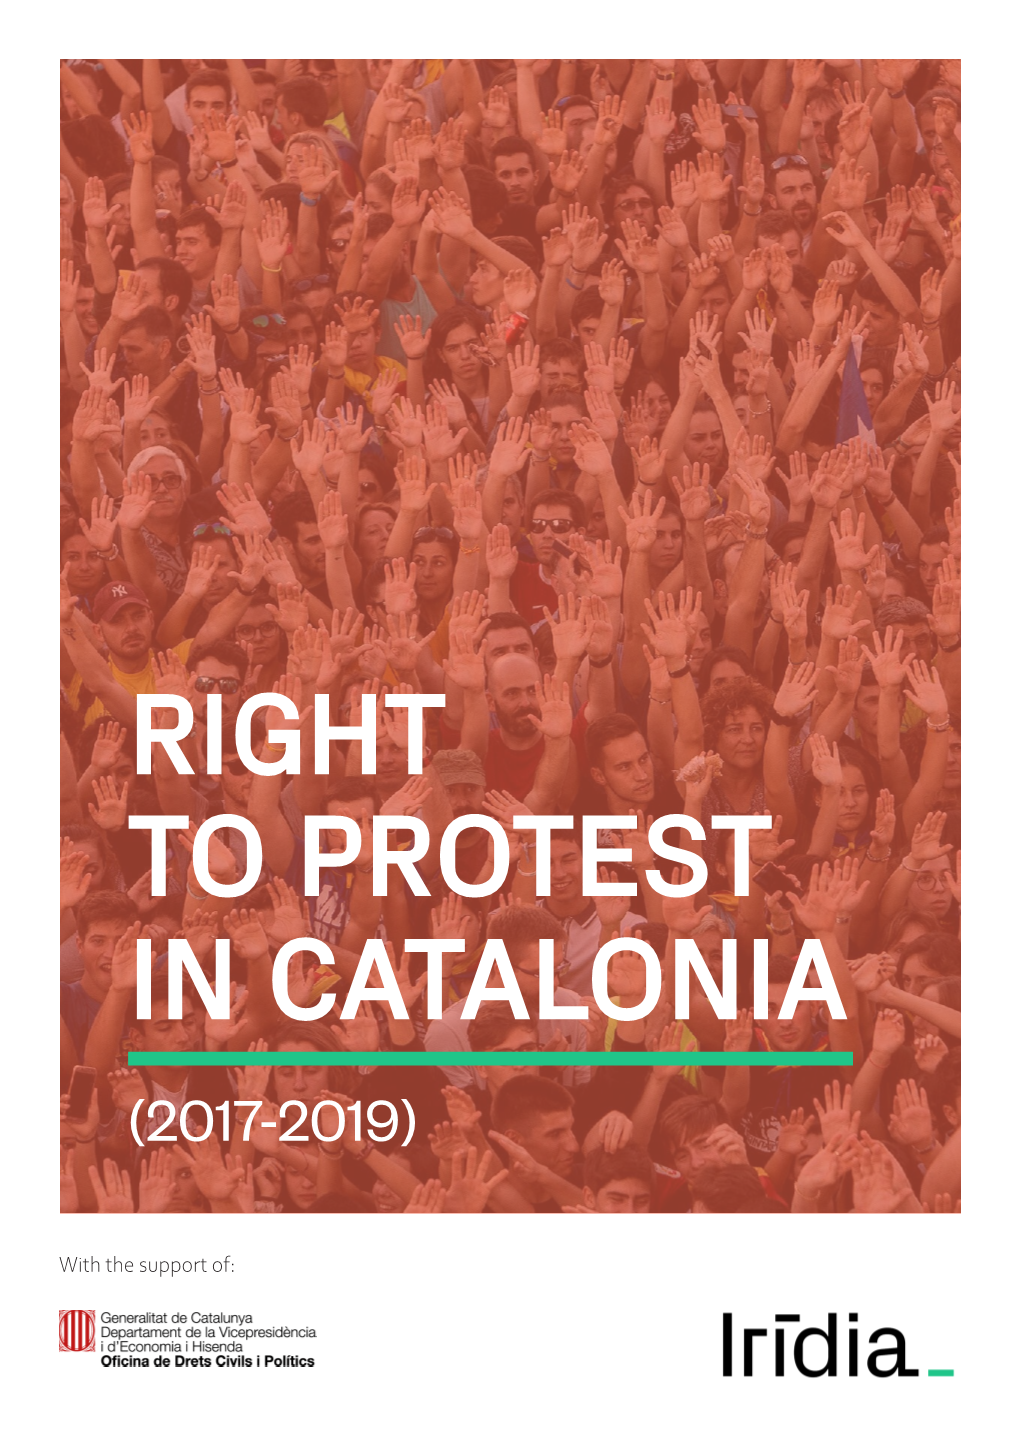 Right to Protest in Catalonia (2017-2019)